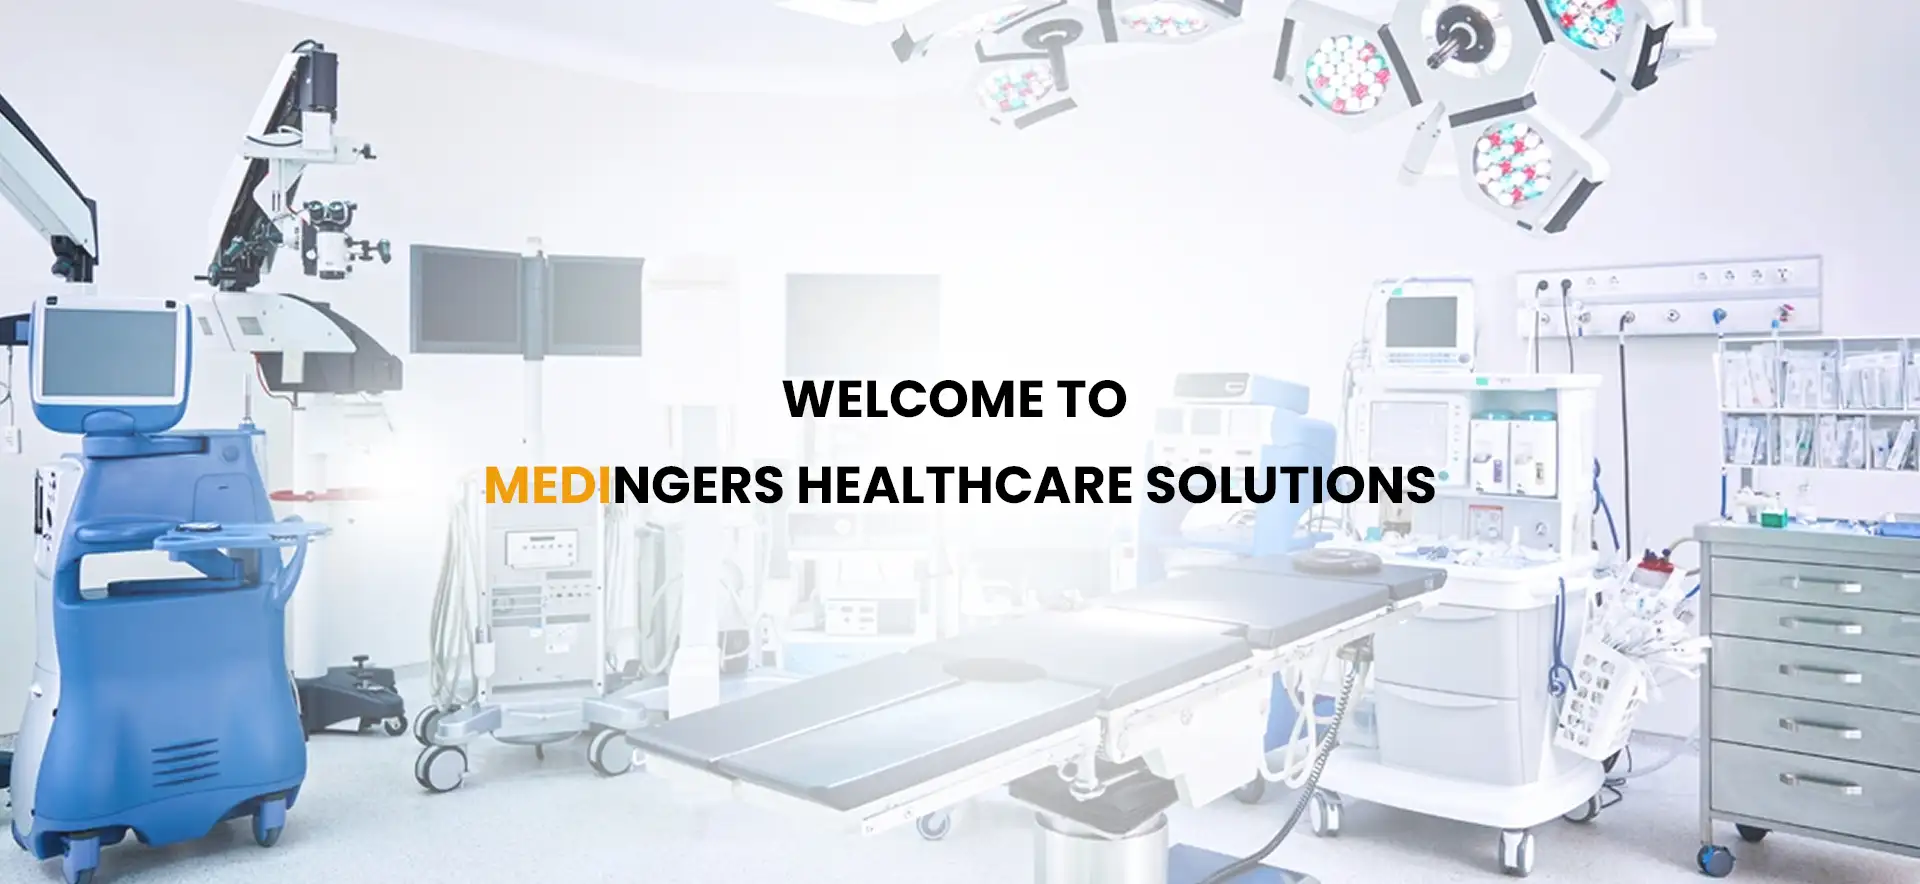 Medingers Healthcare Solutions